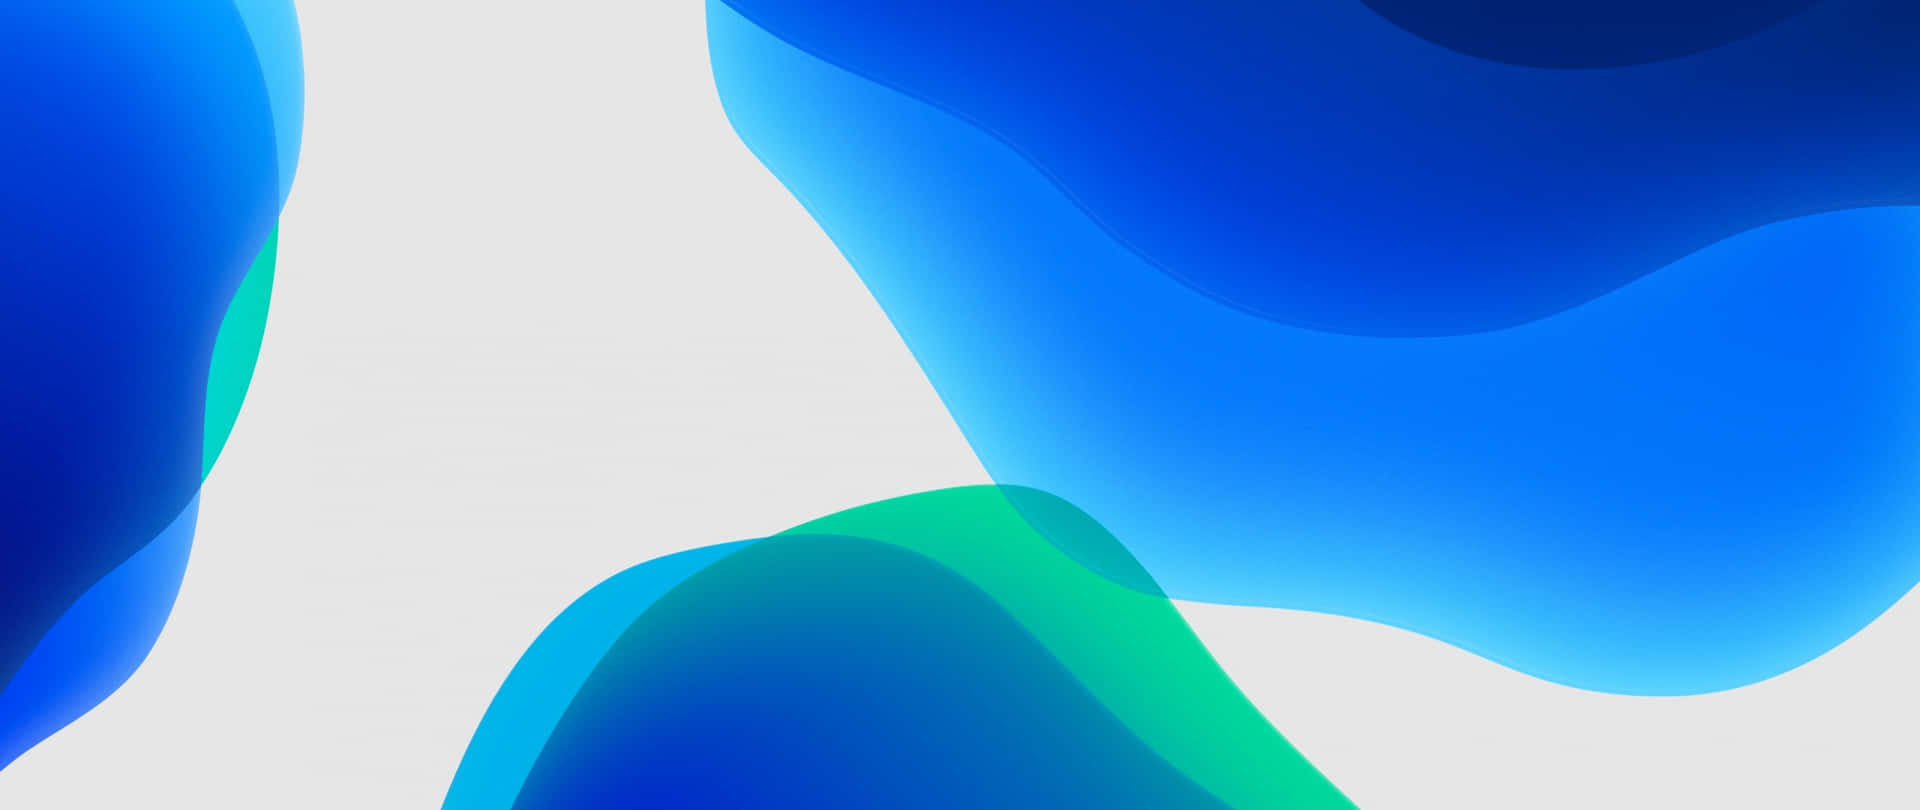 Blue Green Abstract Waves Wallpaper